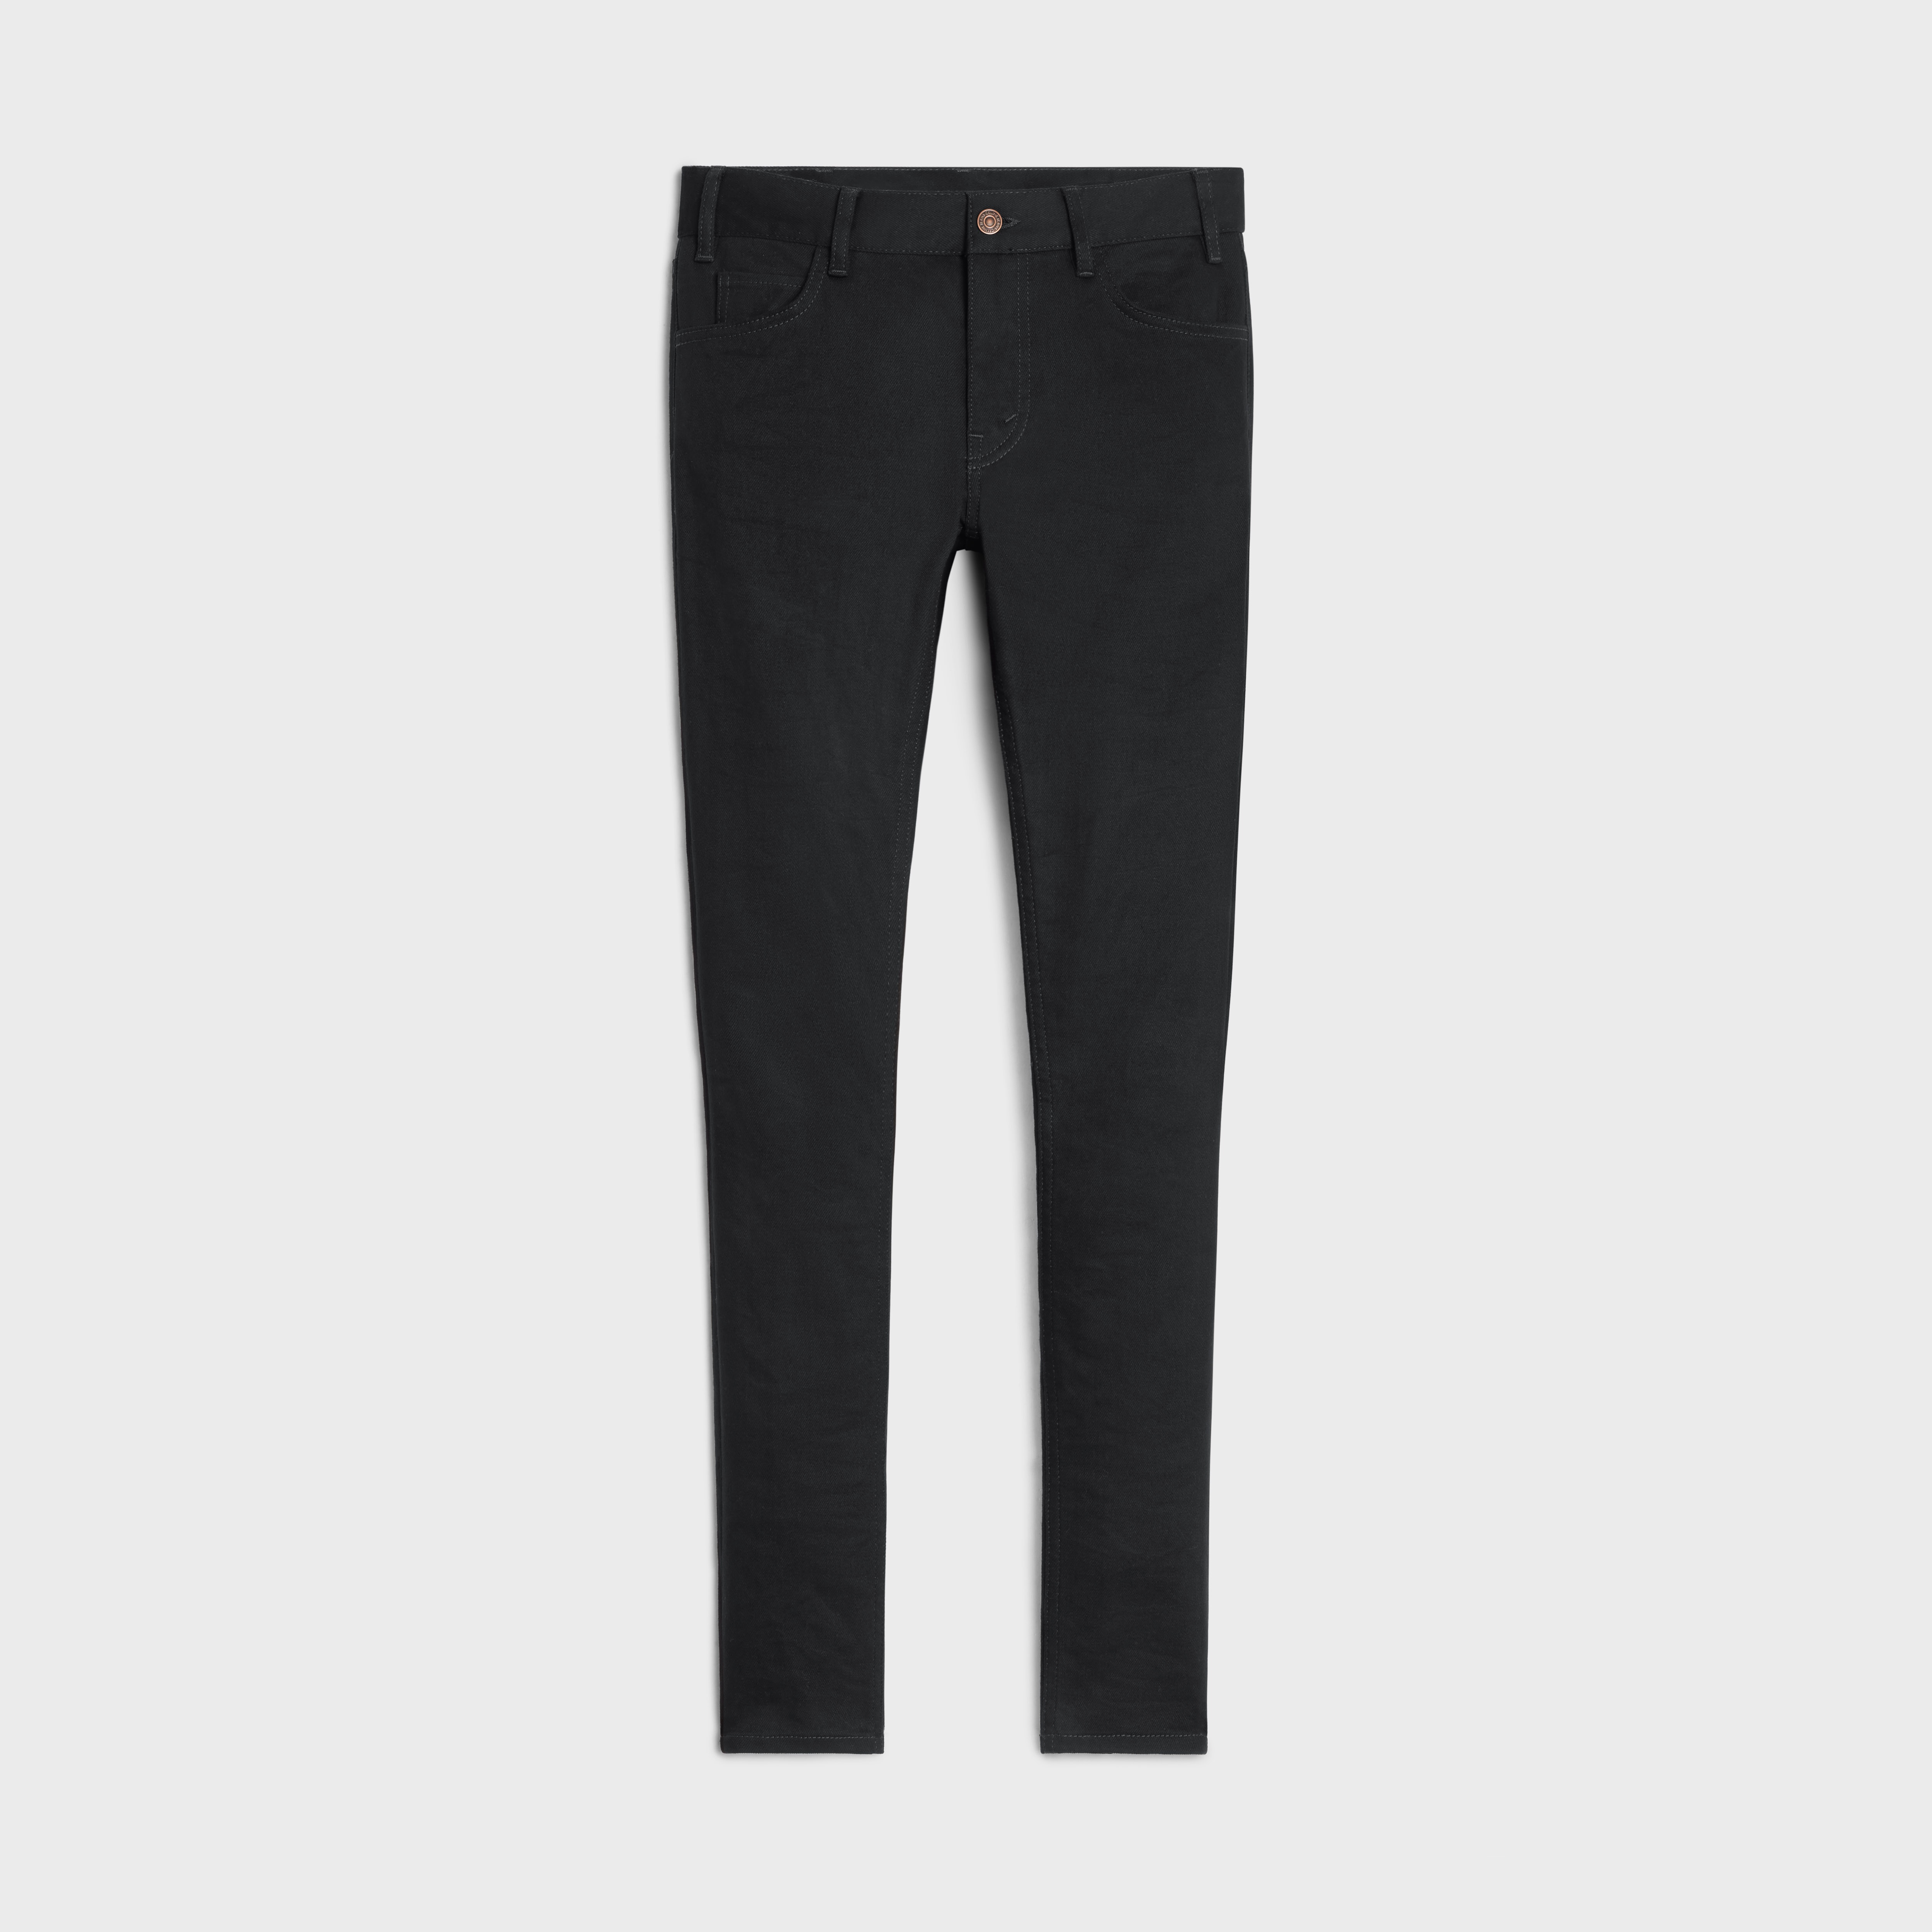 Neo skinny jeans in pure black wash denim - 1